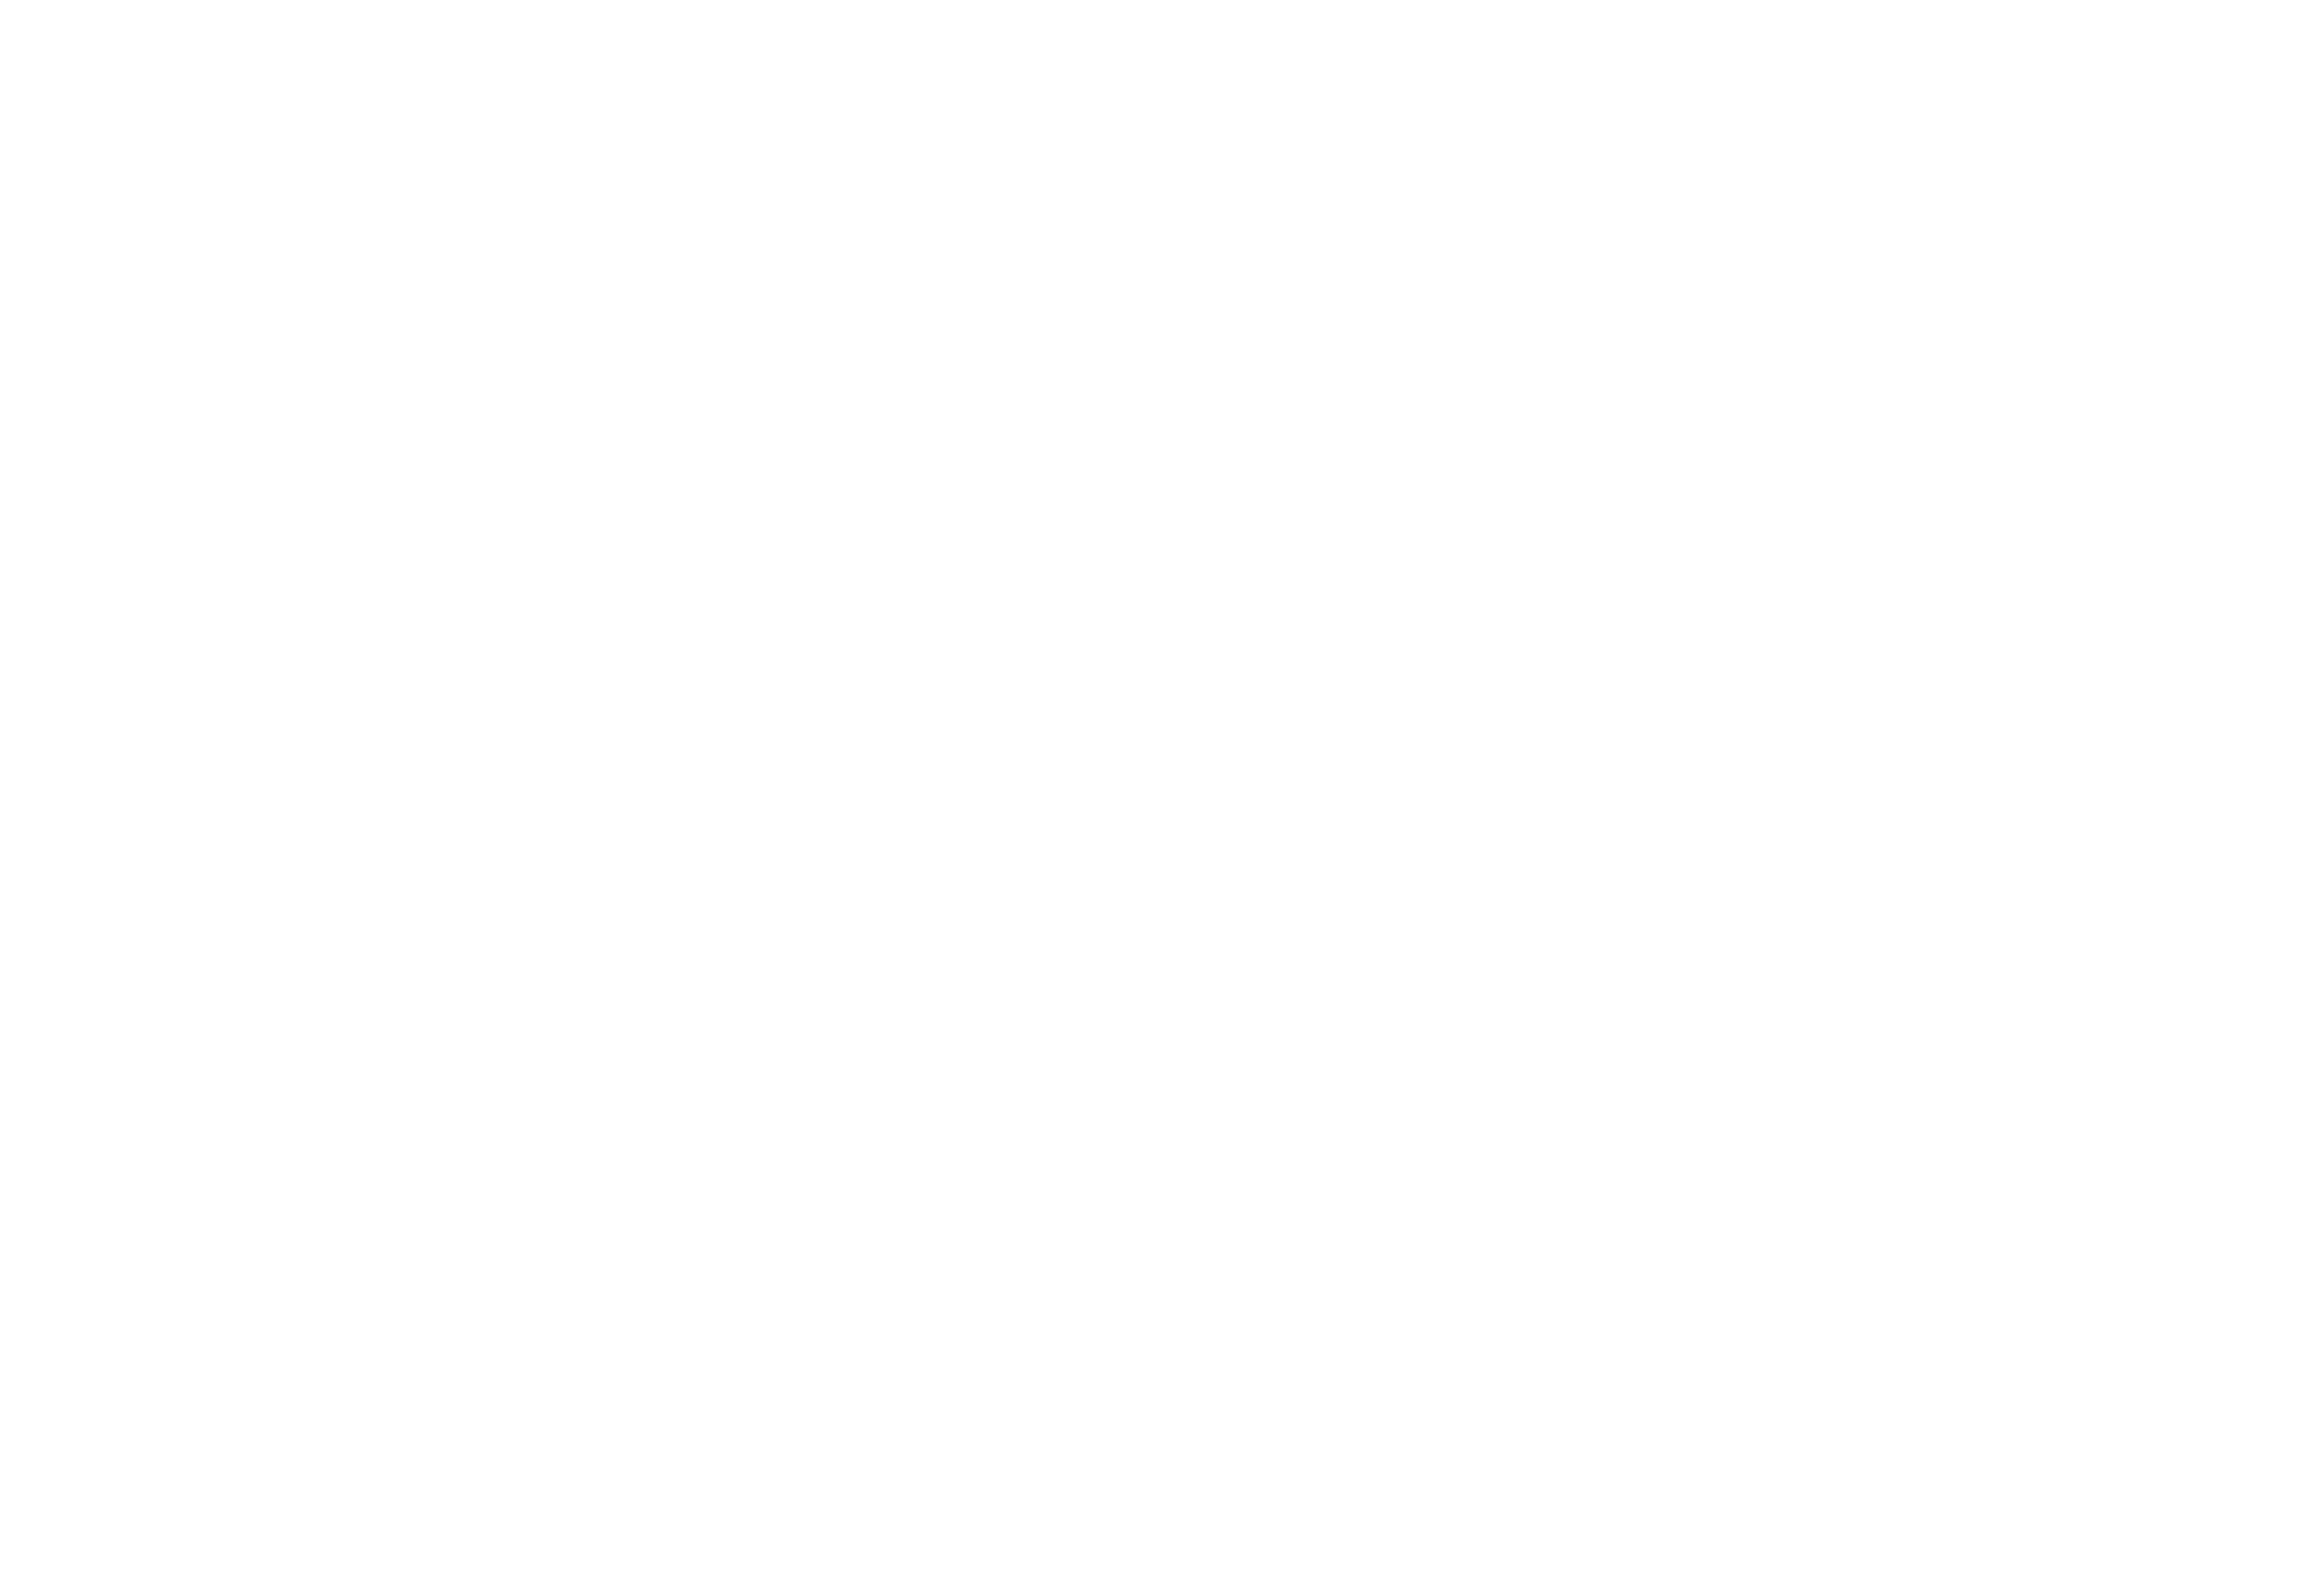 House of Digital Art